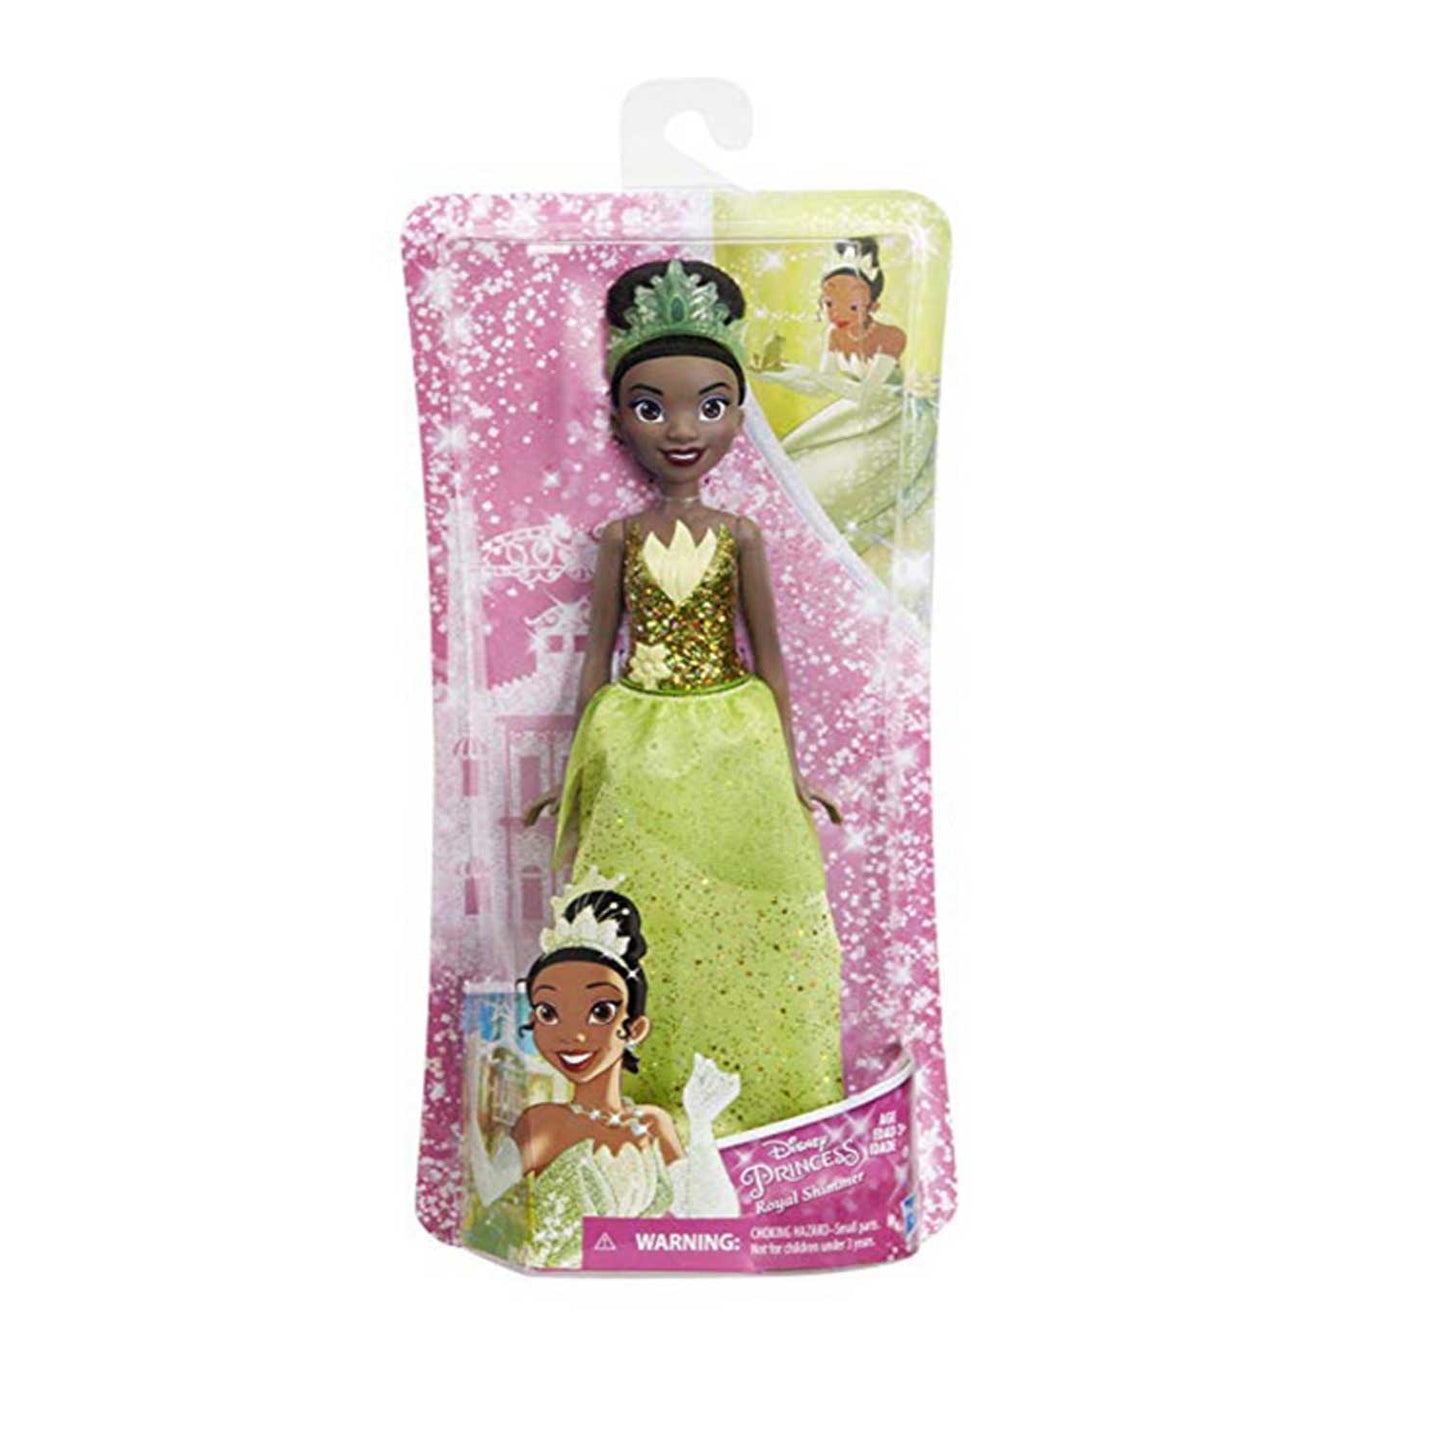 Hasbro - Disney Princess Shimmer Fashion Doll